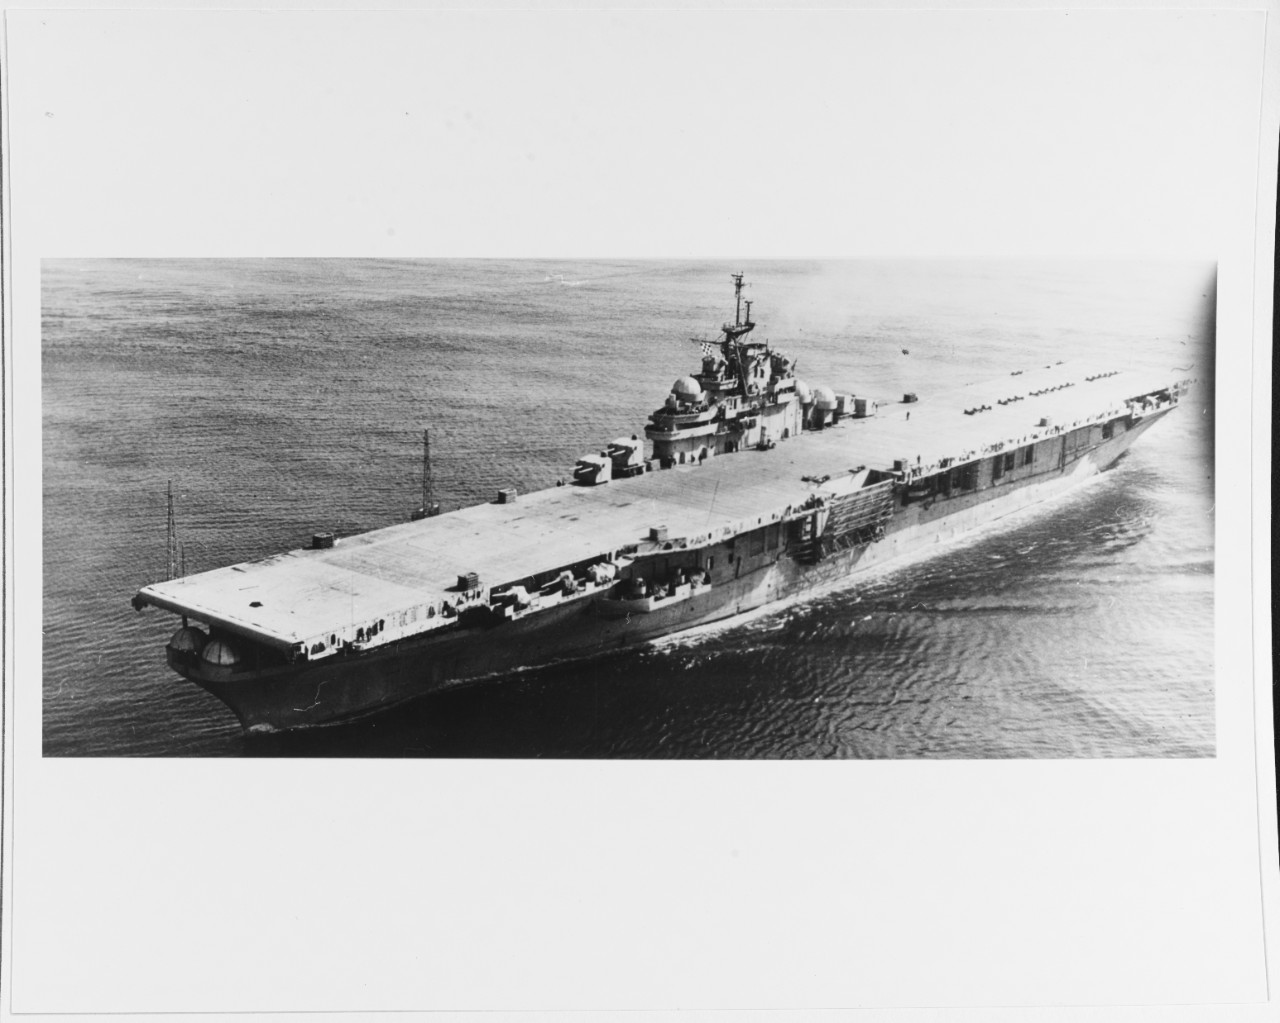 USS SHANGRI-LA (CV-38)